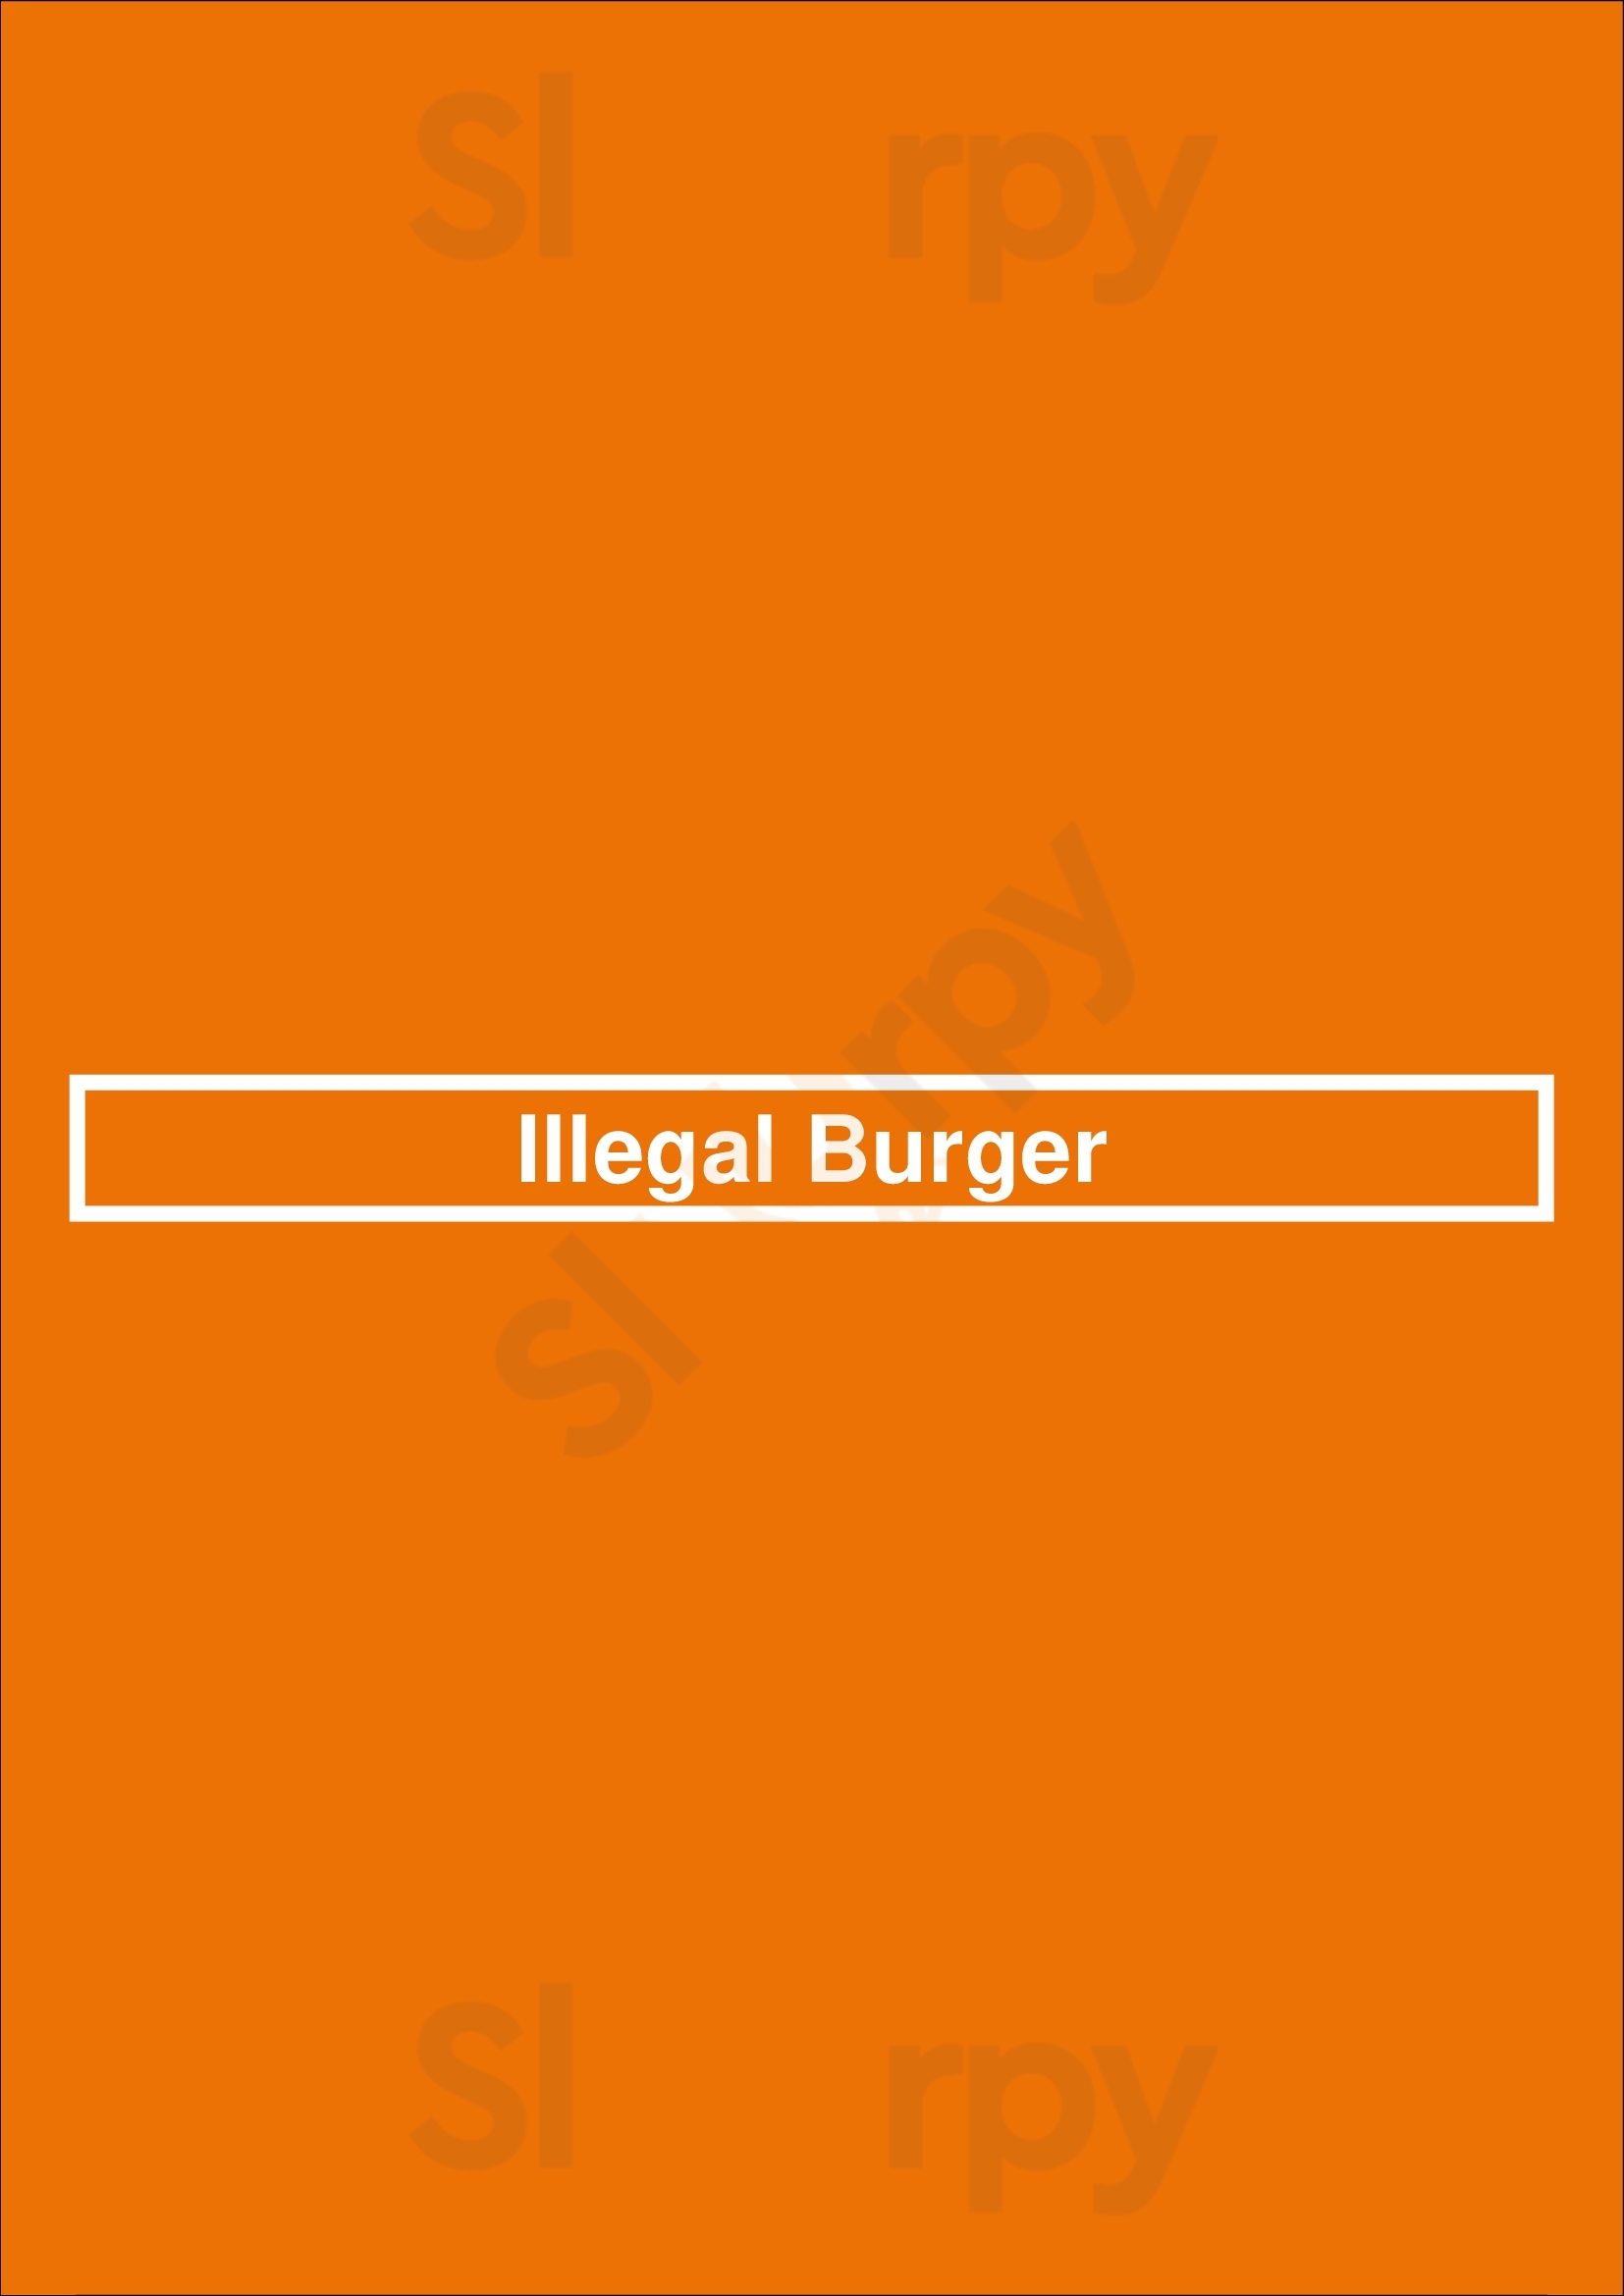 Illegal Burger Denver Menu - 1